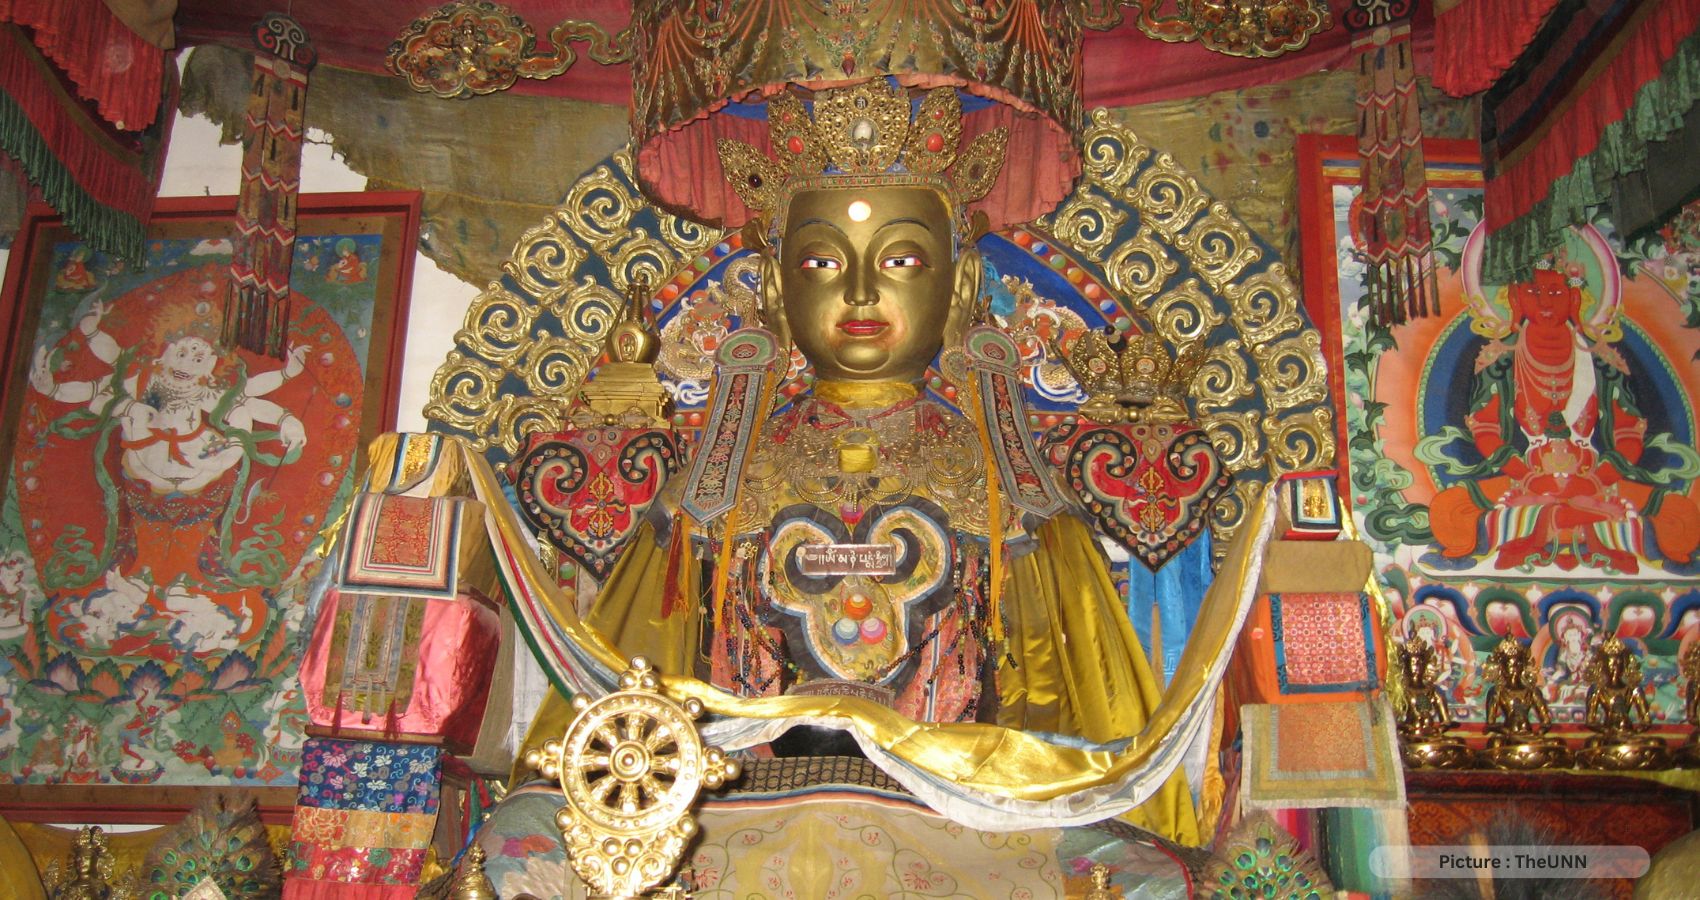 Mongolia in Tibetan Buddhism and China’s Influence